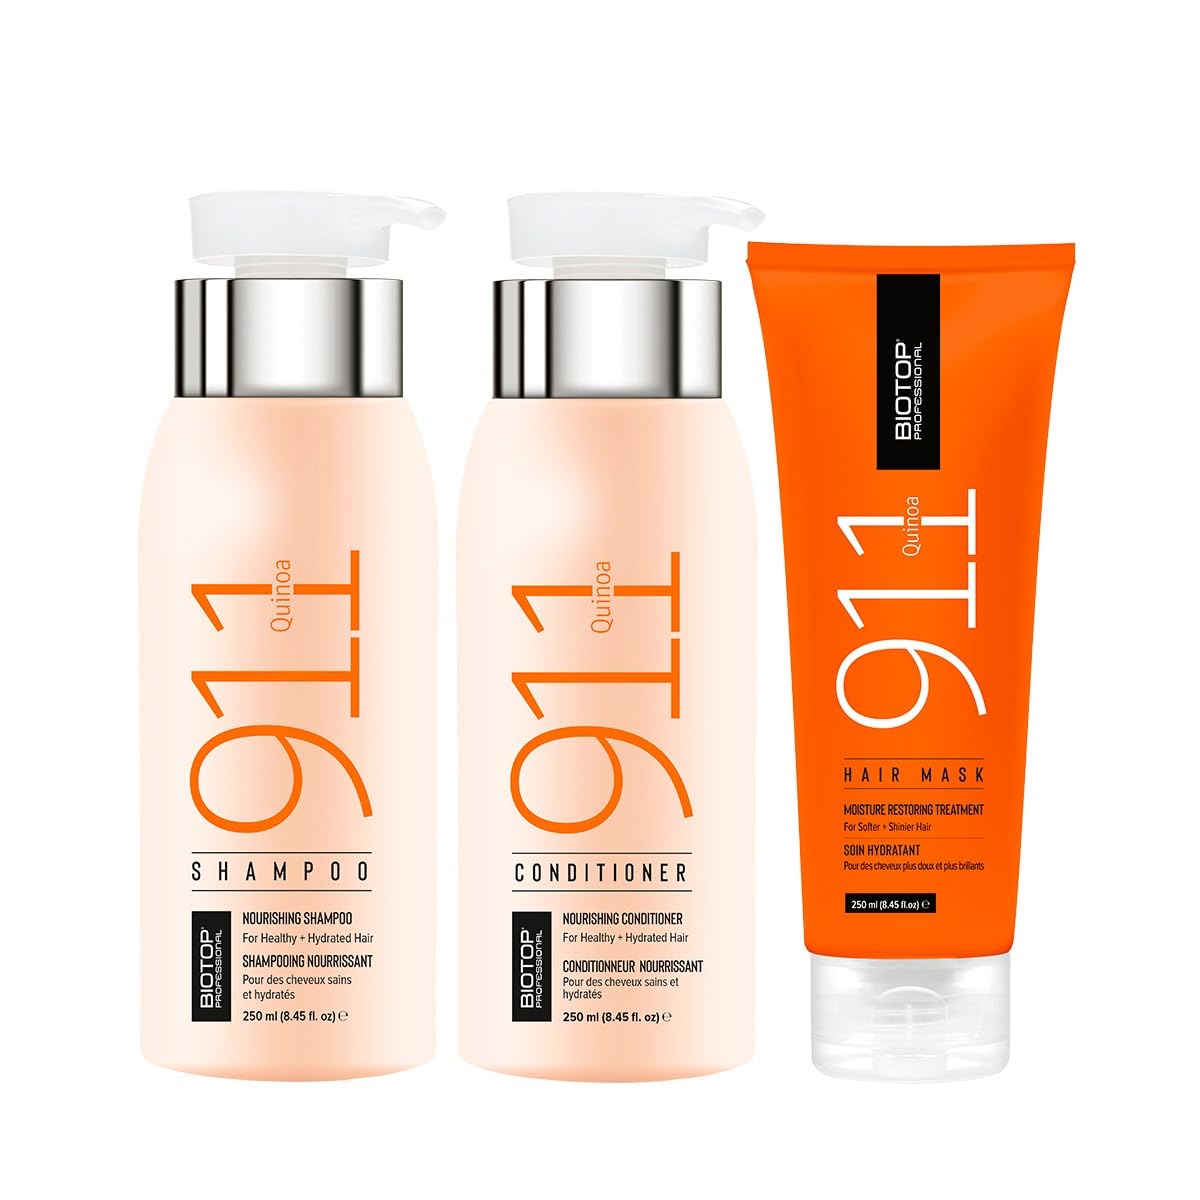 Biotop Professional 911 Nourishing Shampoo + Nourishing Conditioner + Moisture Restoring Treatment Hair Mask 250Ml Each Quinoa Unisex Combo Pack